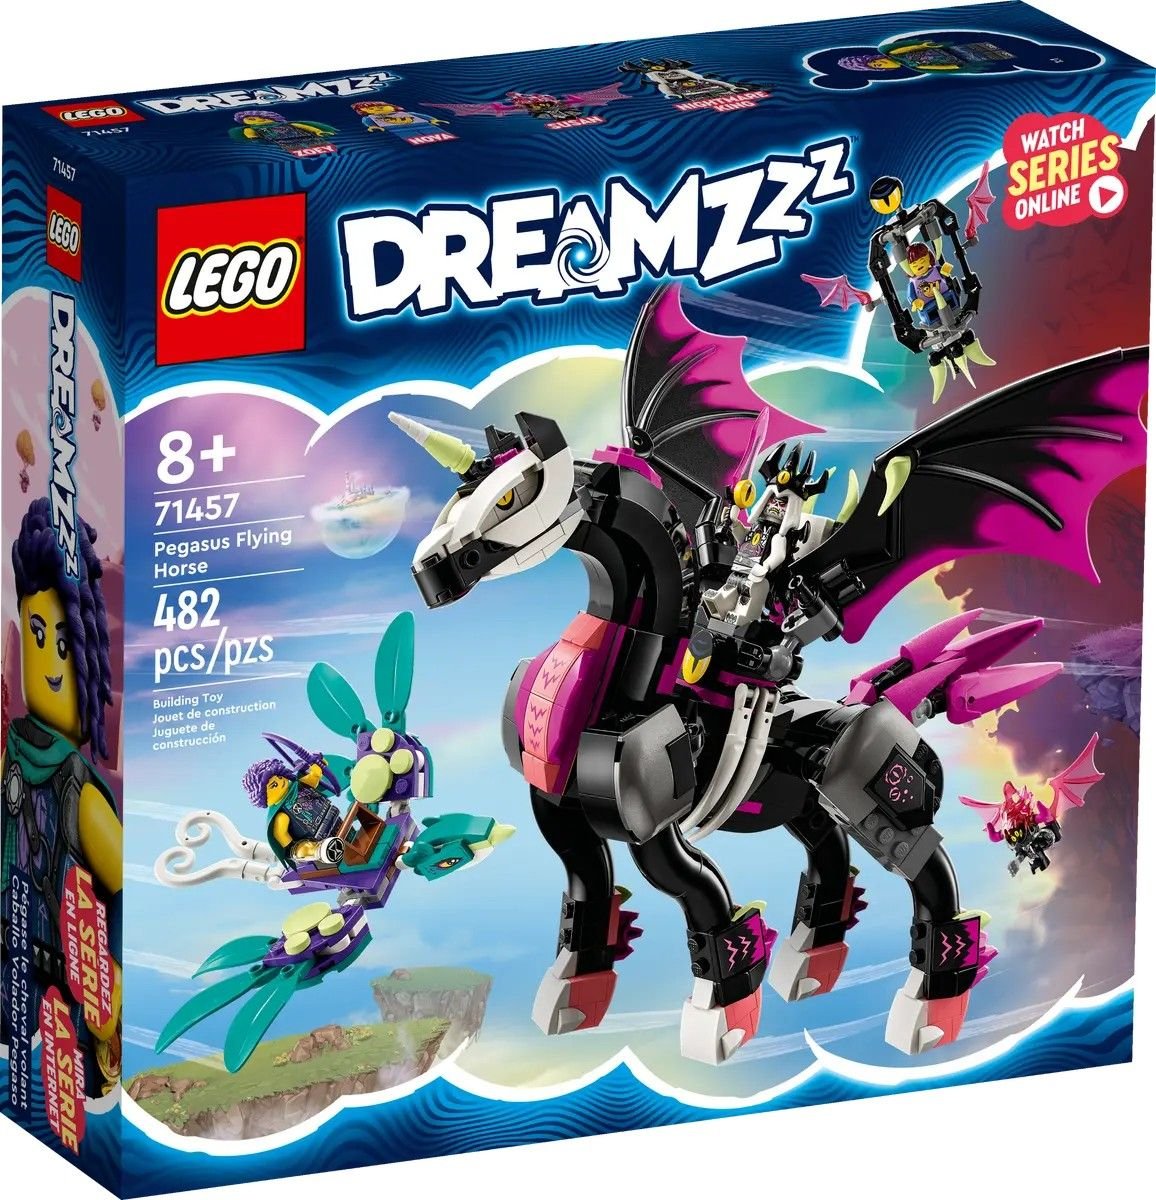 Pegasus Flying Horse LEGO DREAMZZZ 71457